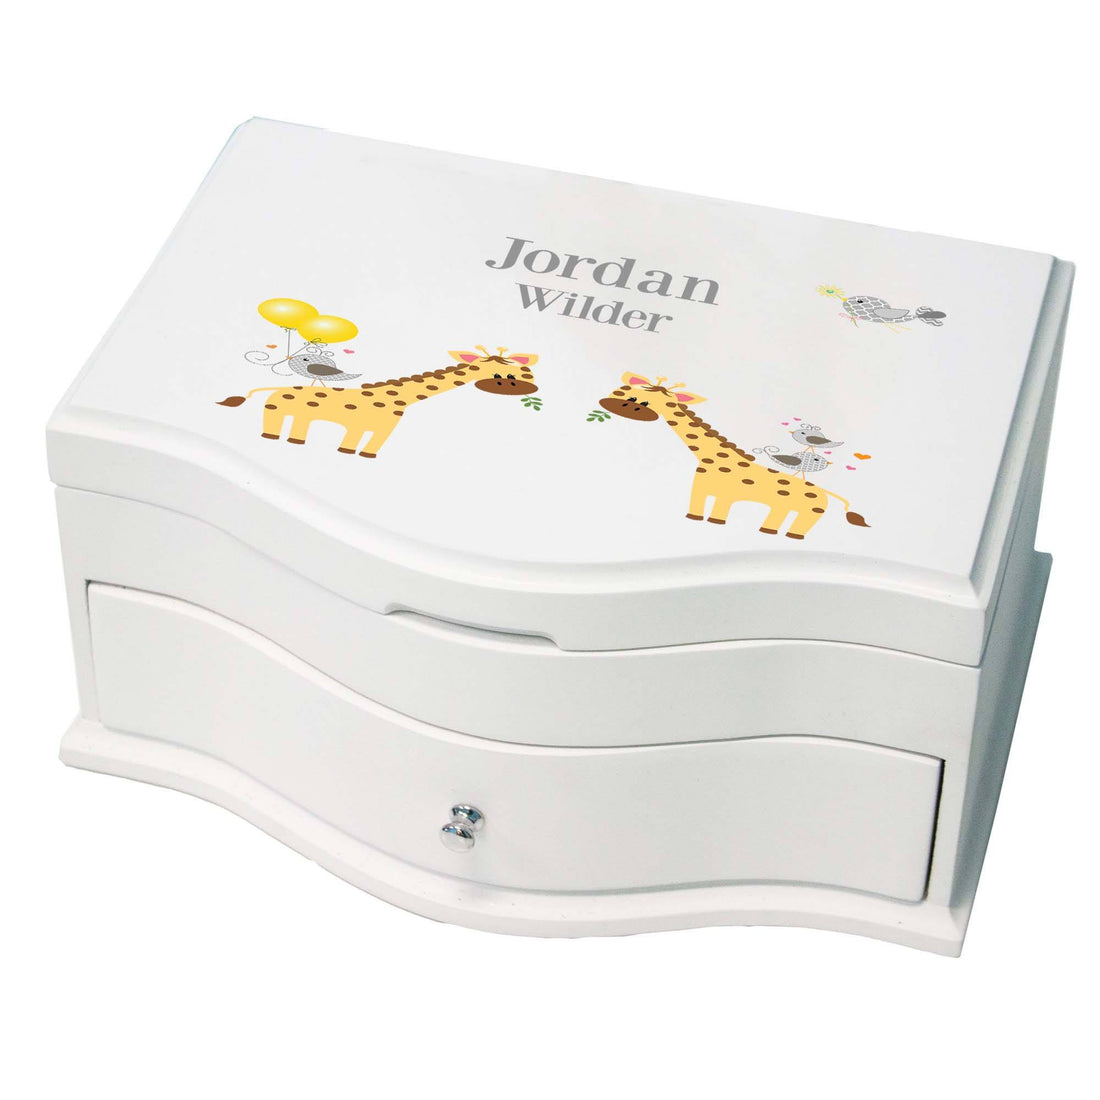 Princess Girls Jewelry Box with Giraffe design